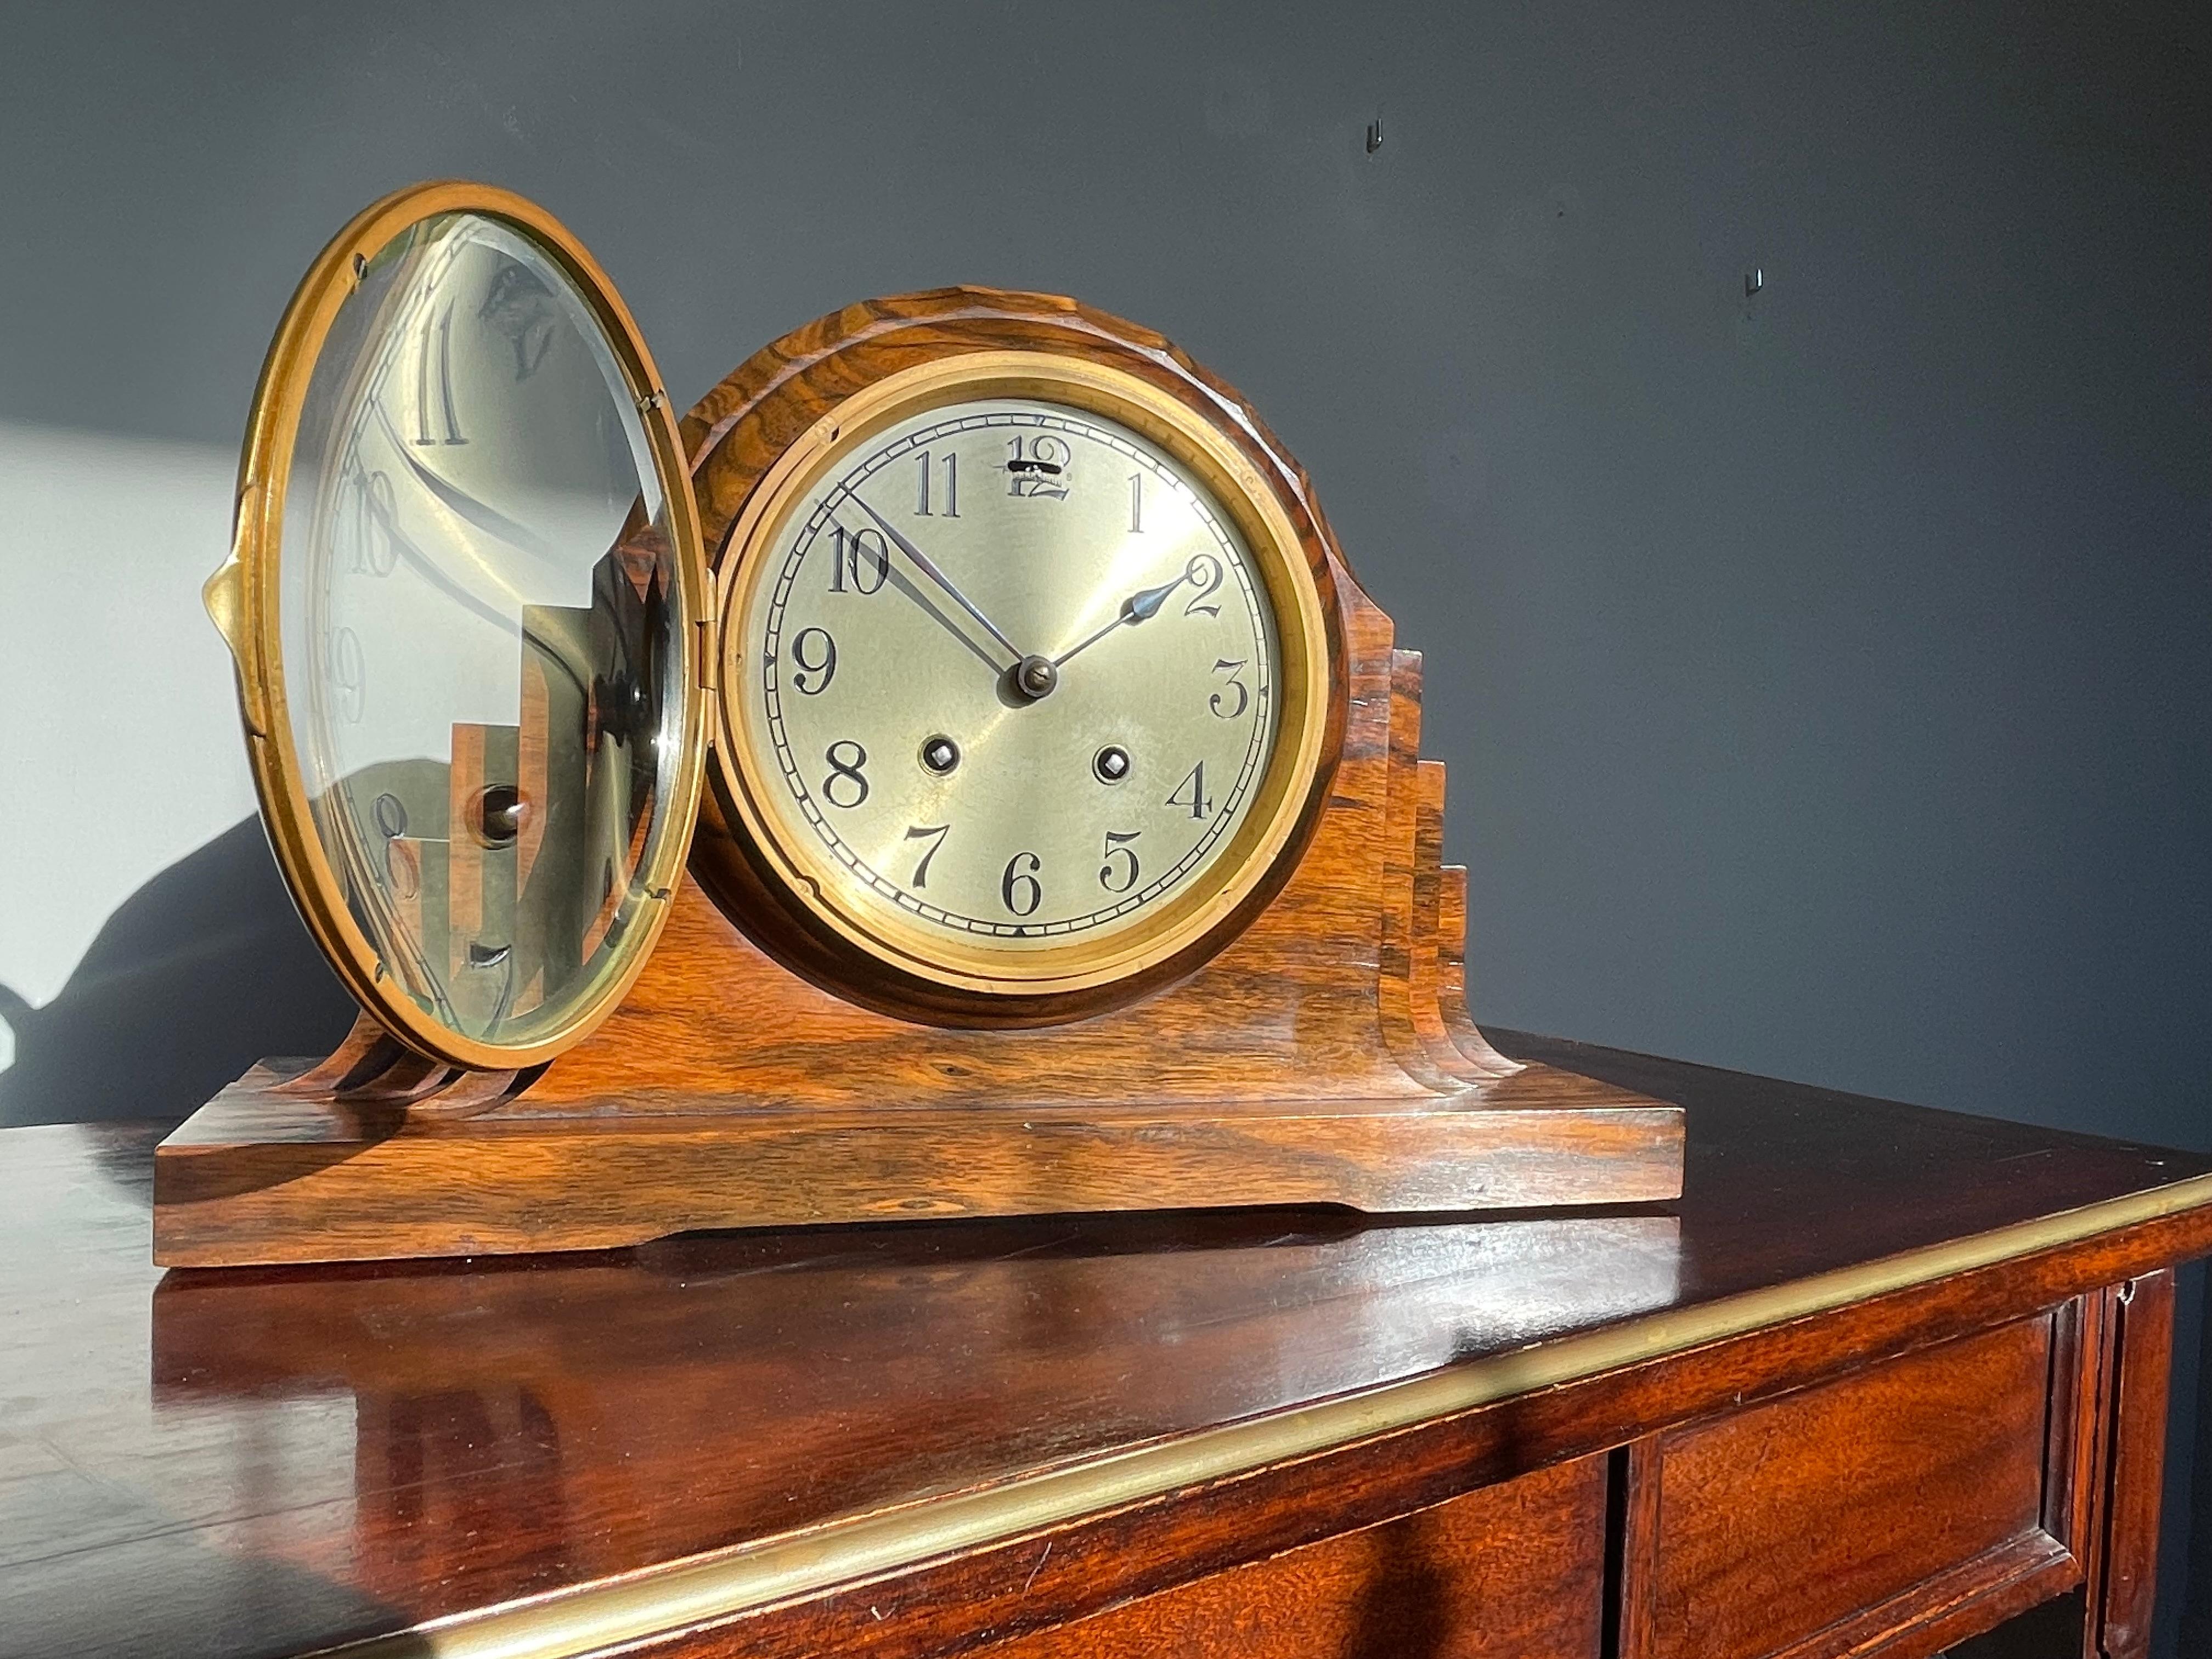 20th Century Top Design 1920s Art Deco Mantel Clock Made of Solid Coromandel w. Beveled Glass For Sale